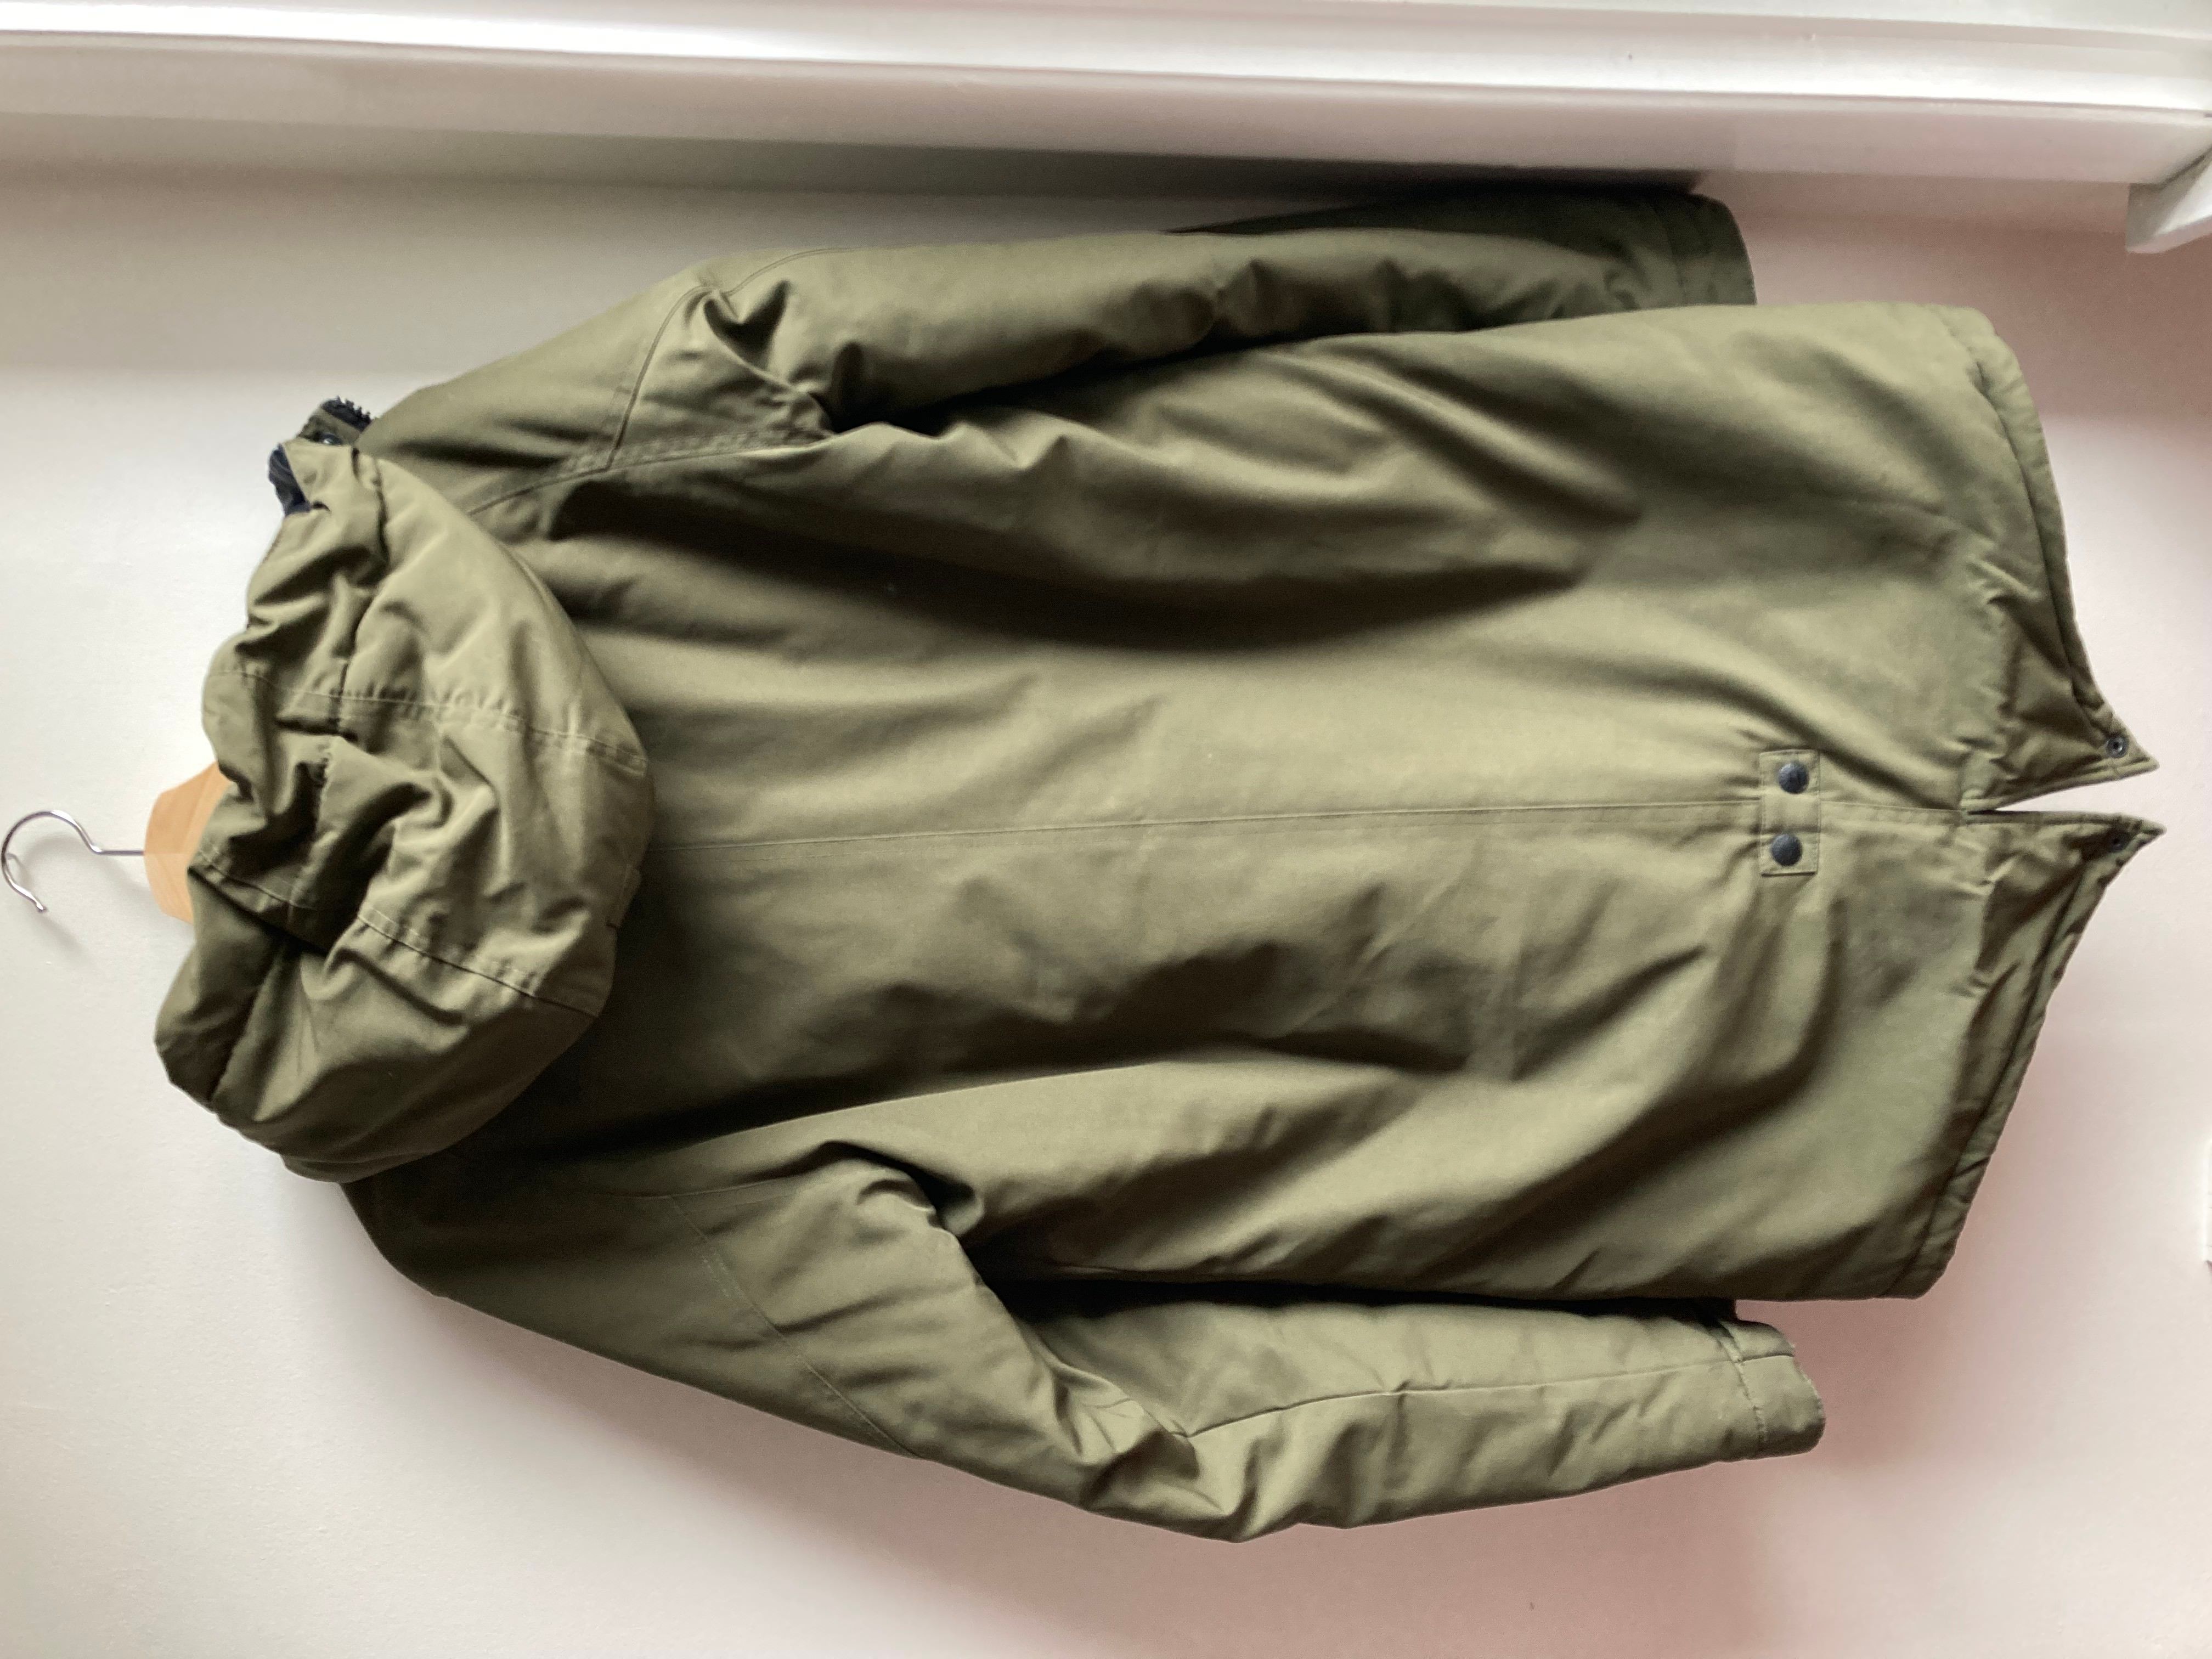 Penfield Kingman Jacket - Winter Coat Size US S / EU 44-46 / 1 - 7 Thumbnail